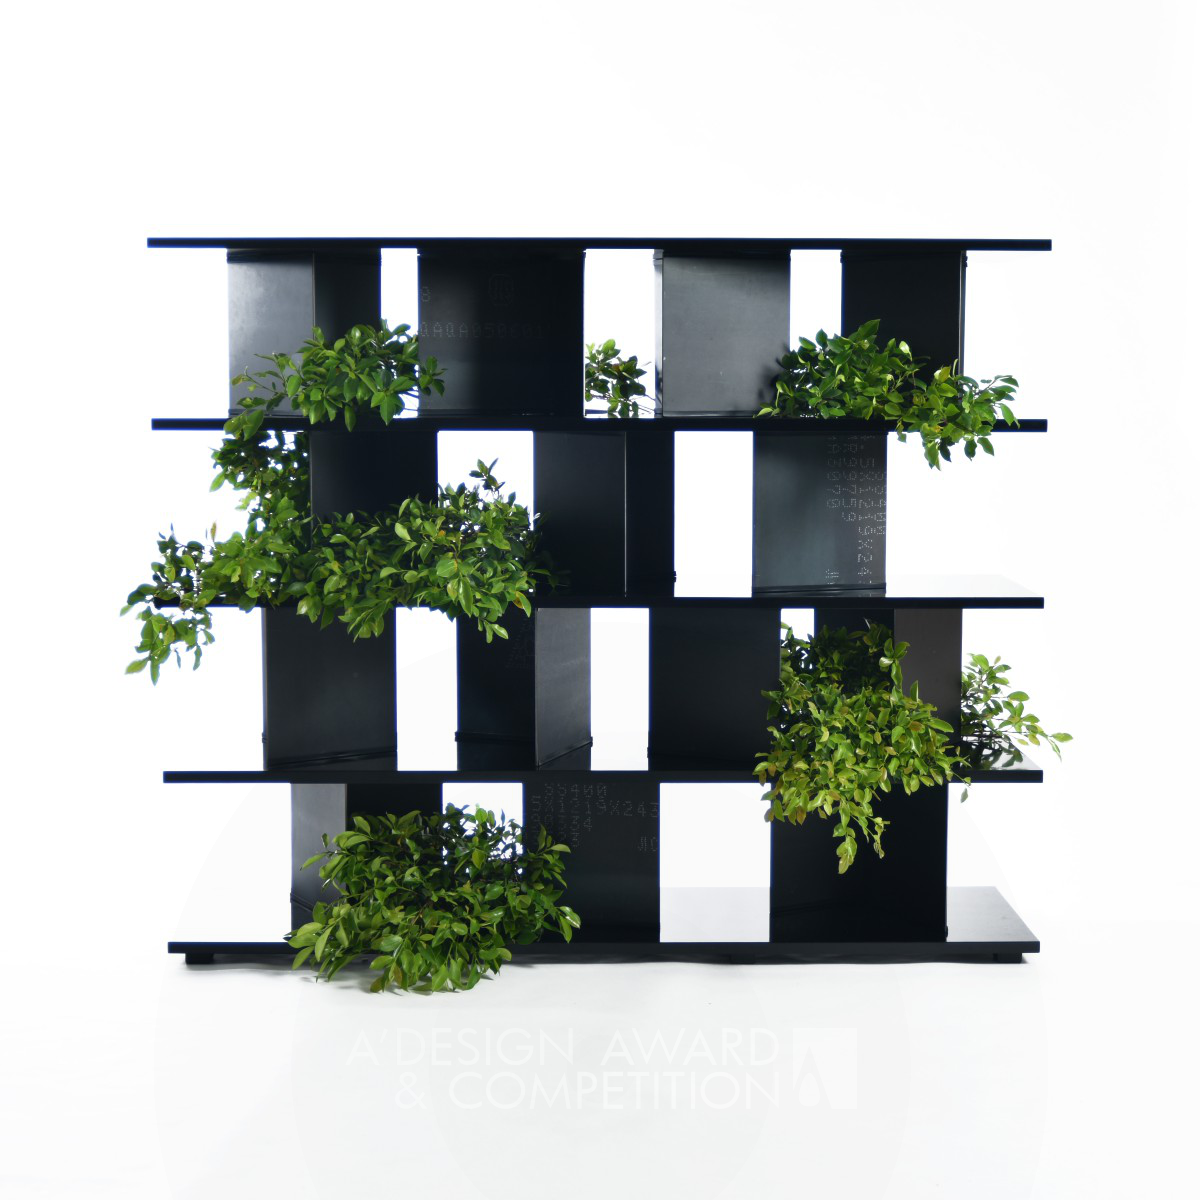 Misaki Kiyuna's Butai: Redefining Shelf Design